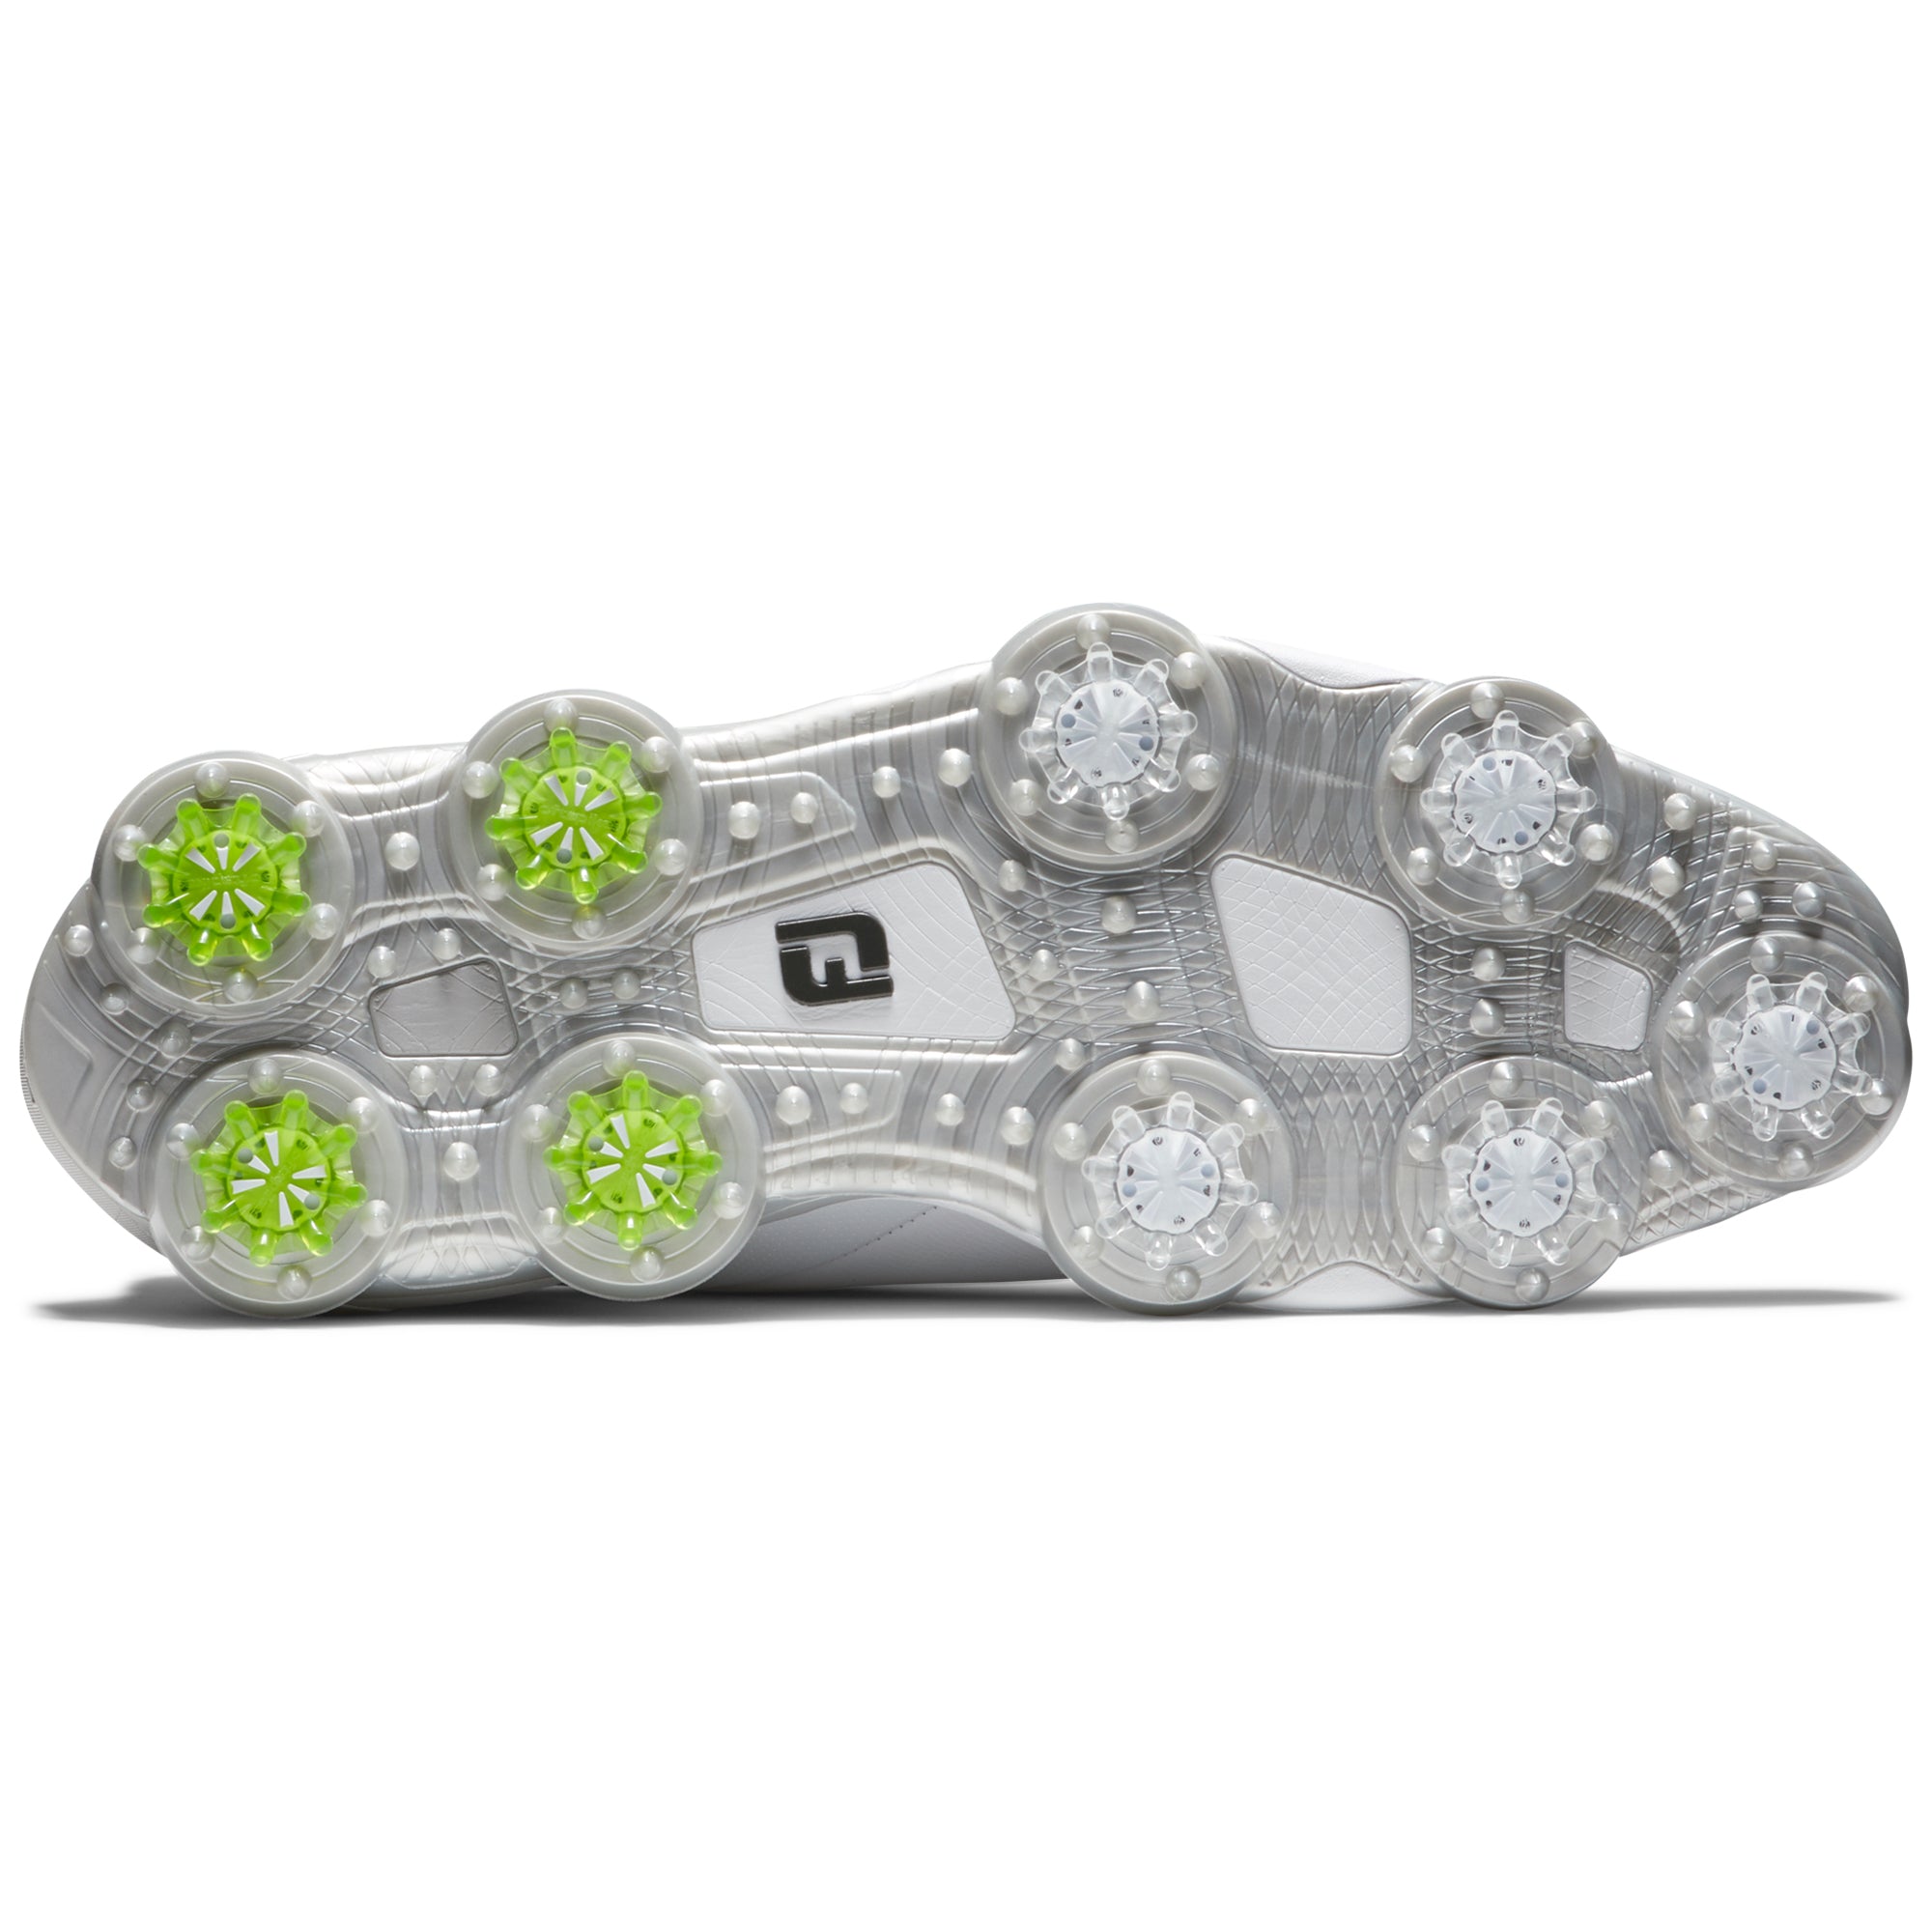 footjoy-tour-alpha-golf-shoes-55505-white-grey-lime